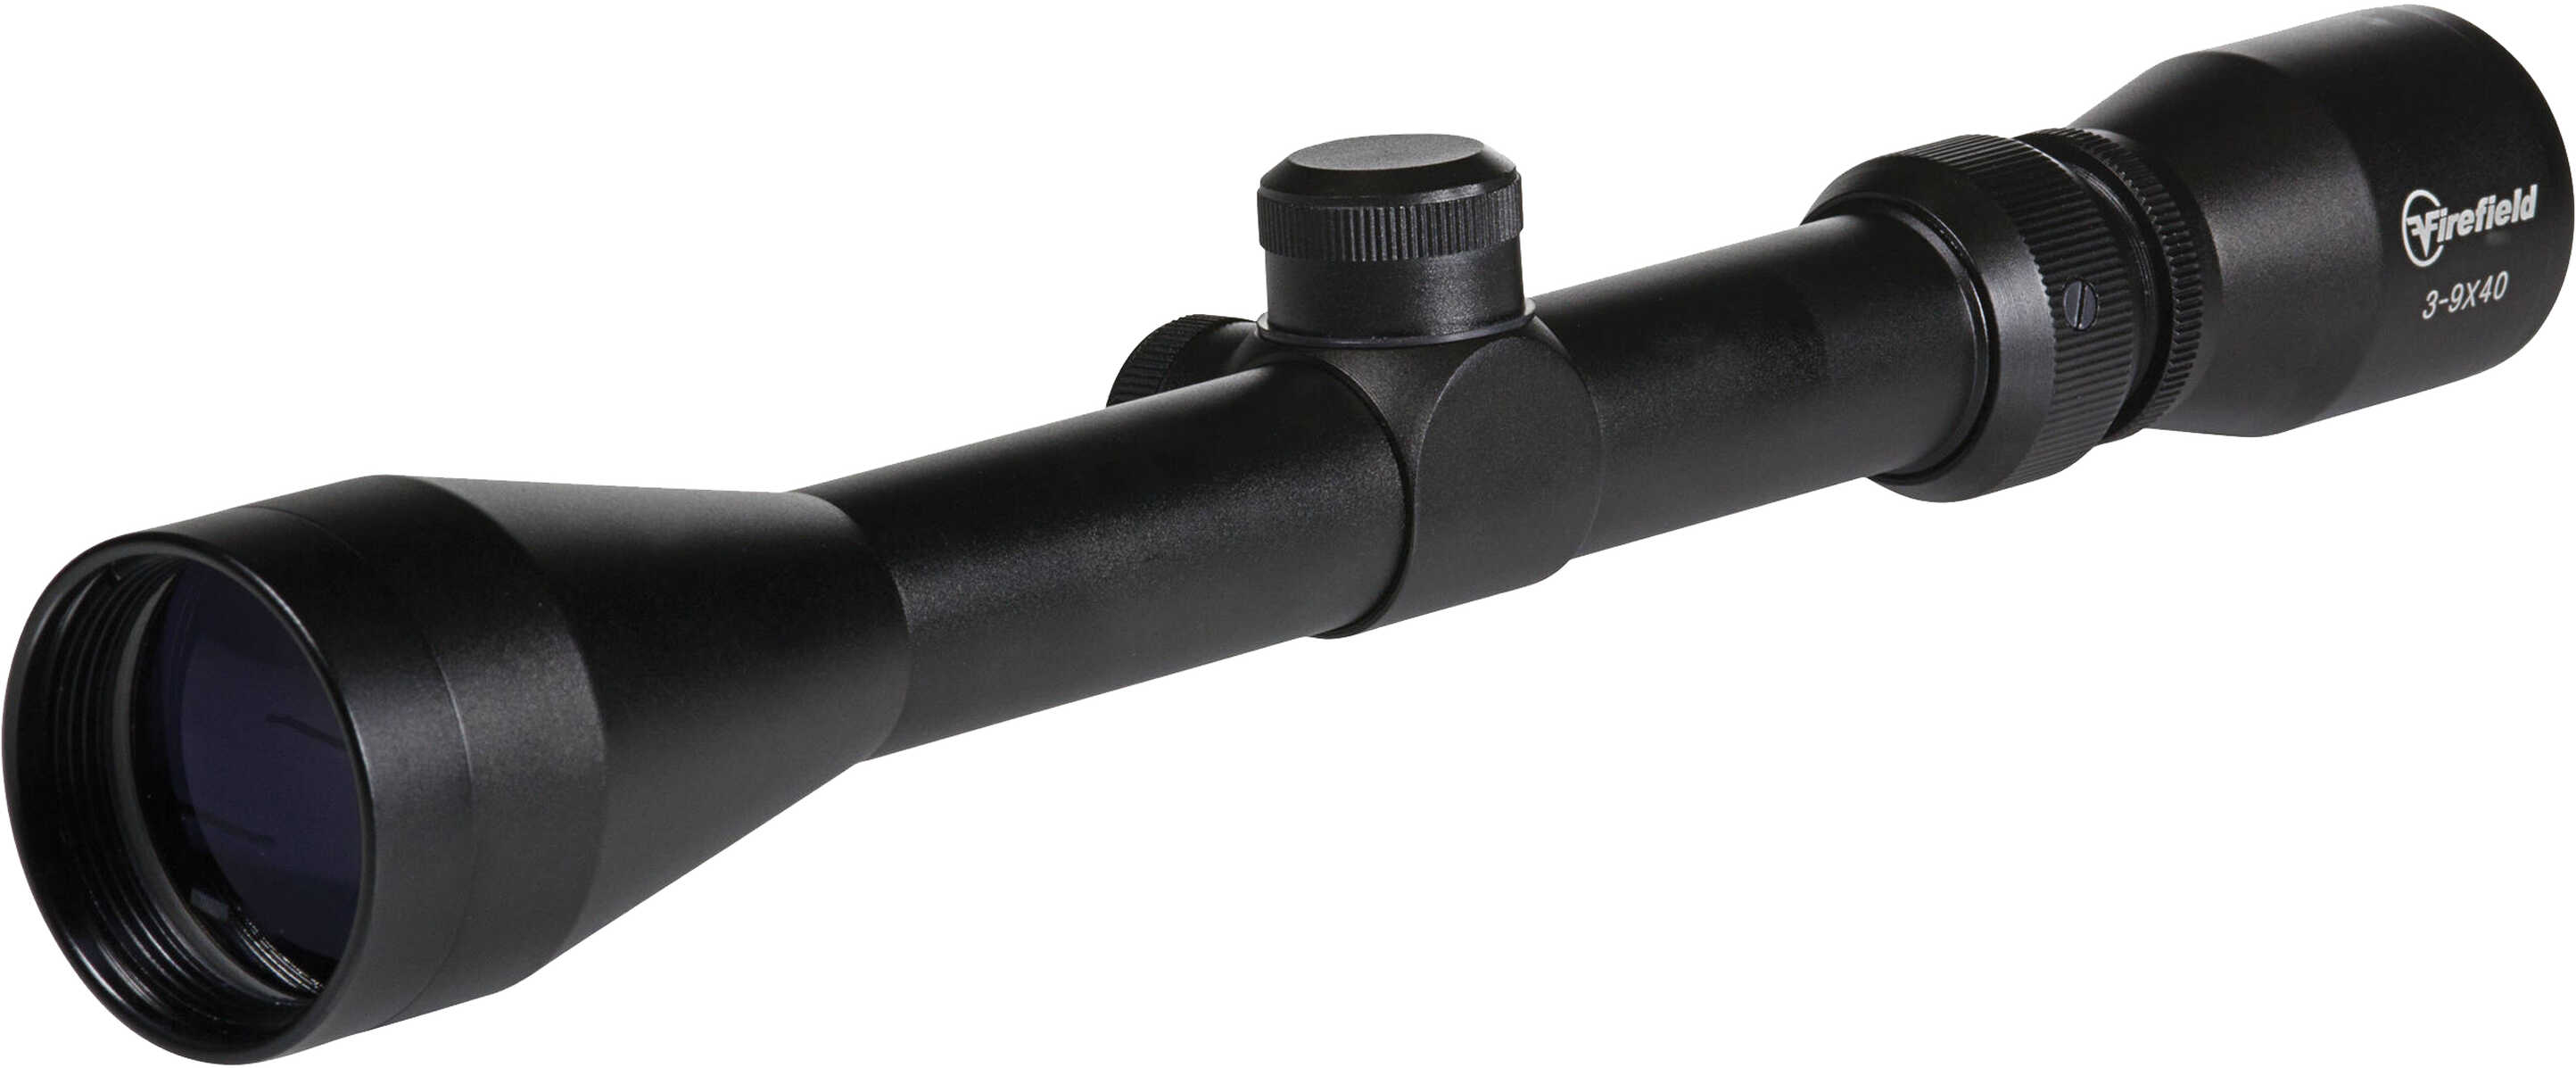 Firefield Agility Riflescope 3-9x40mm, 1" Main Tube, Fine Duplex Reticle, Red/Green Illuminated, Black Md: FF1